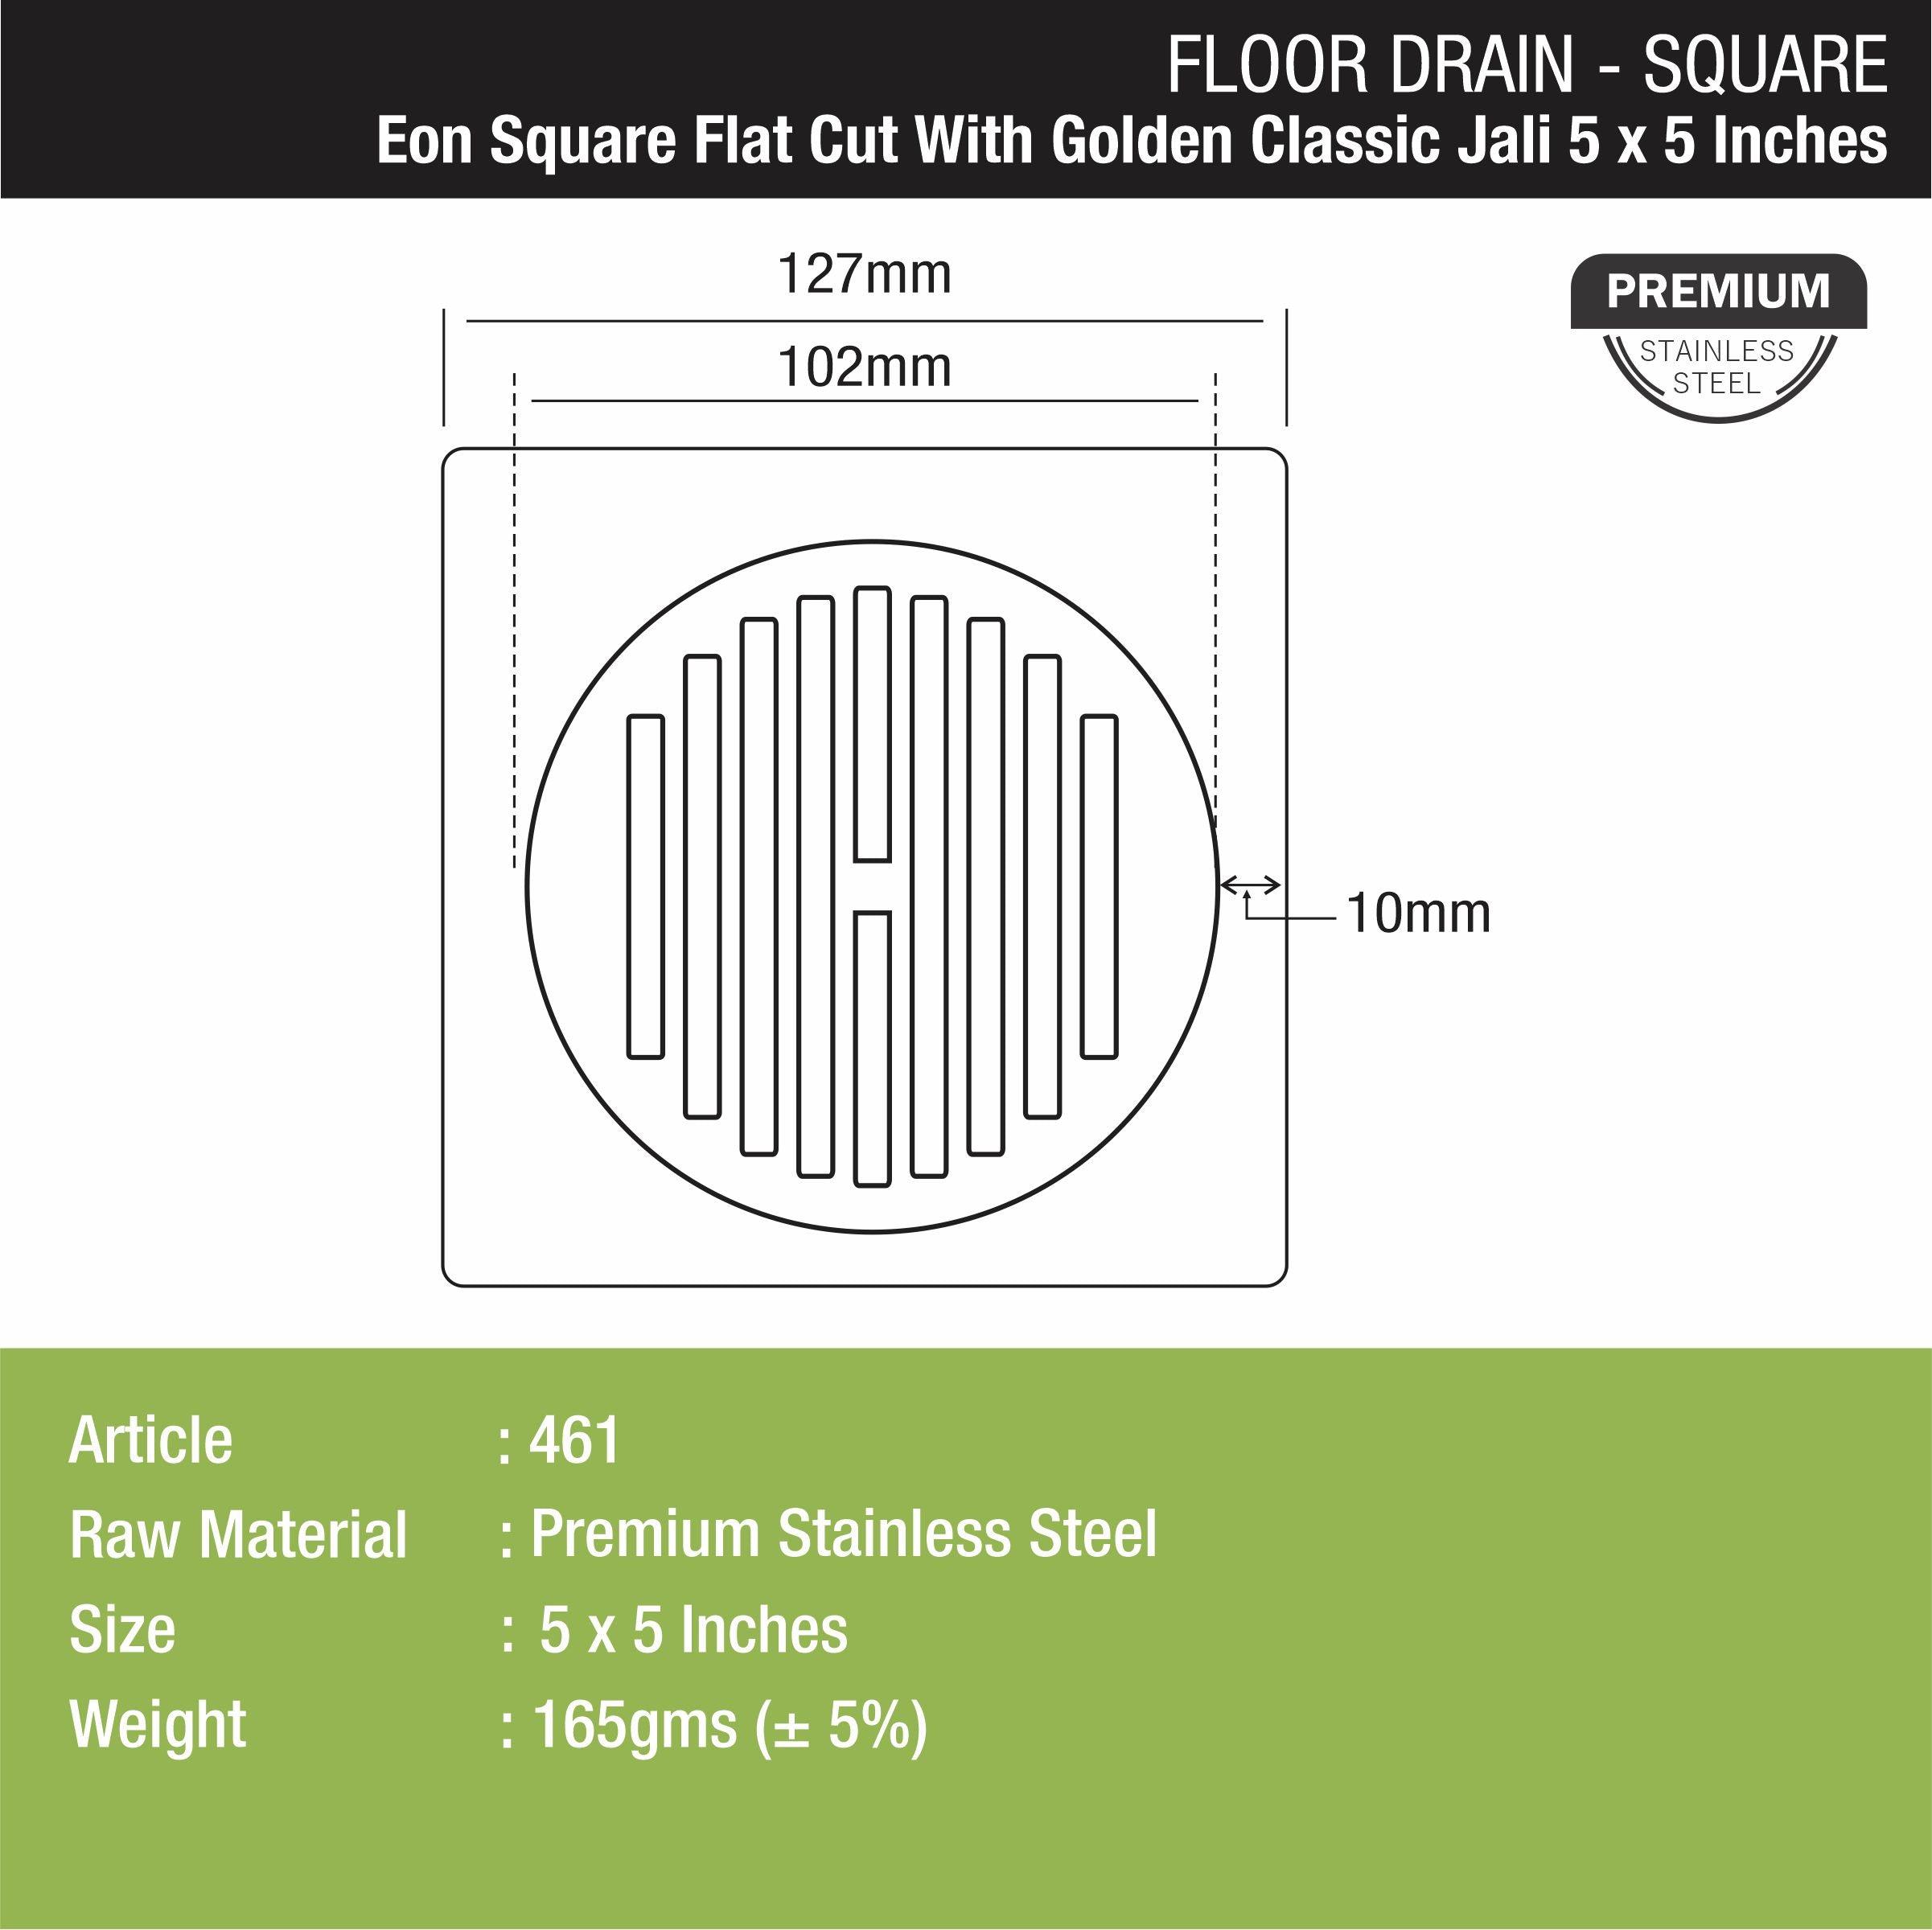 Eon Square Flat Cut Floor Drain with Golden Classic Jali (5 x 5 Inches) - LIPKA - Lipka Home